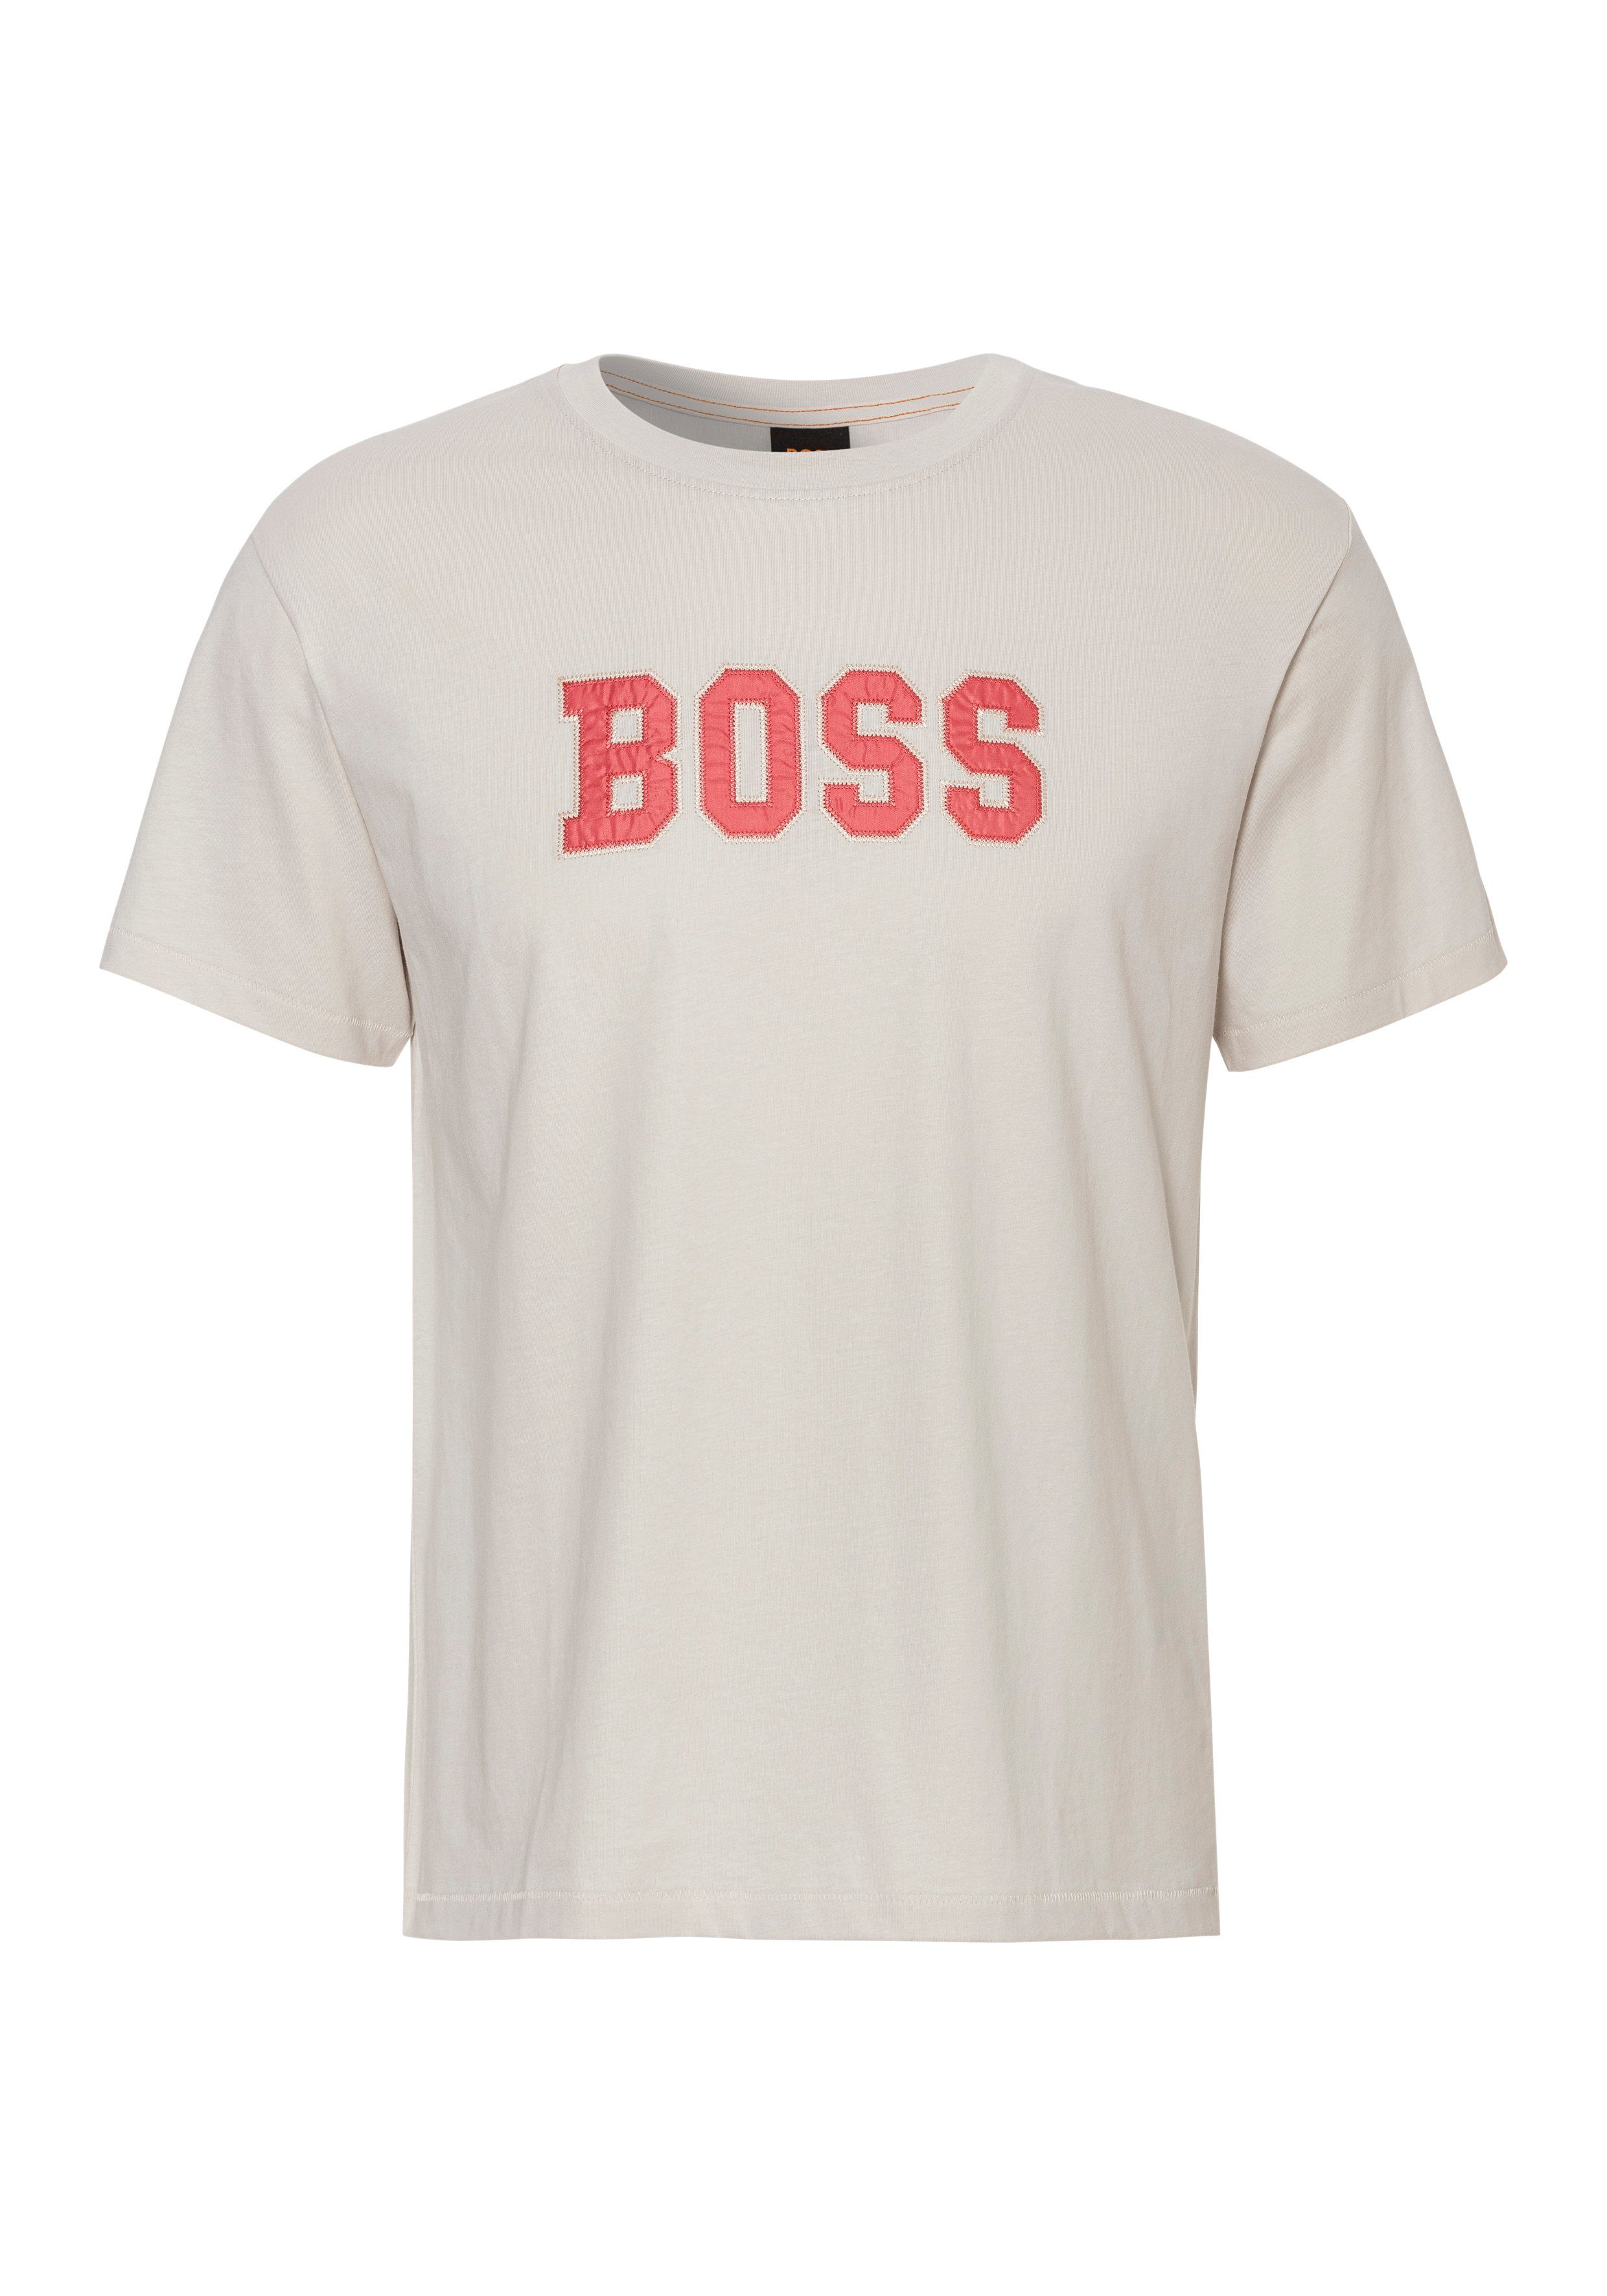 T-Shirt BOSS mit C_Emil BOSS-Logostickerei ORANGE